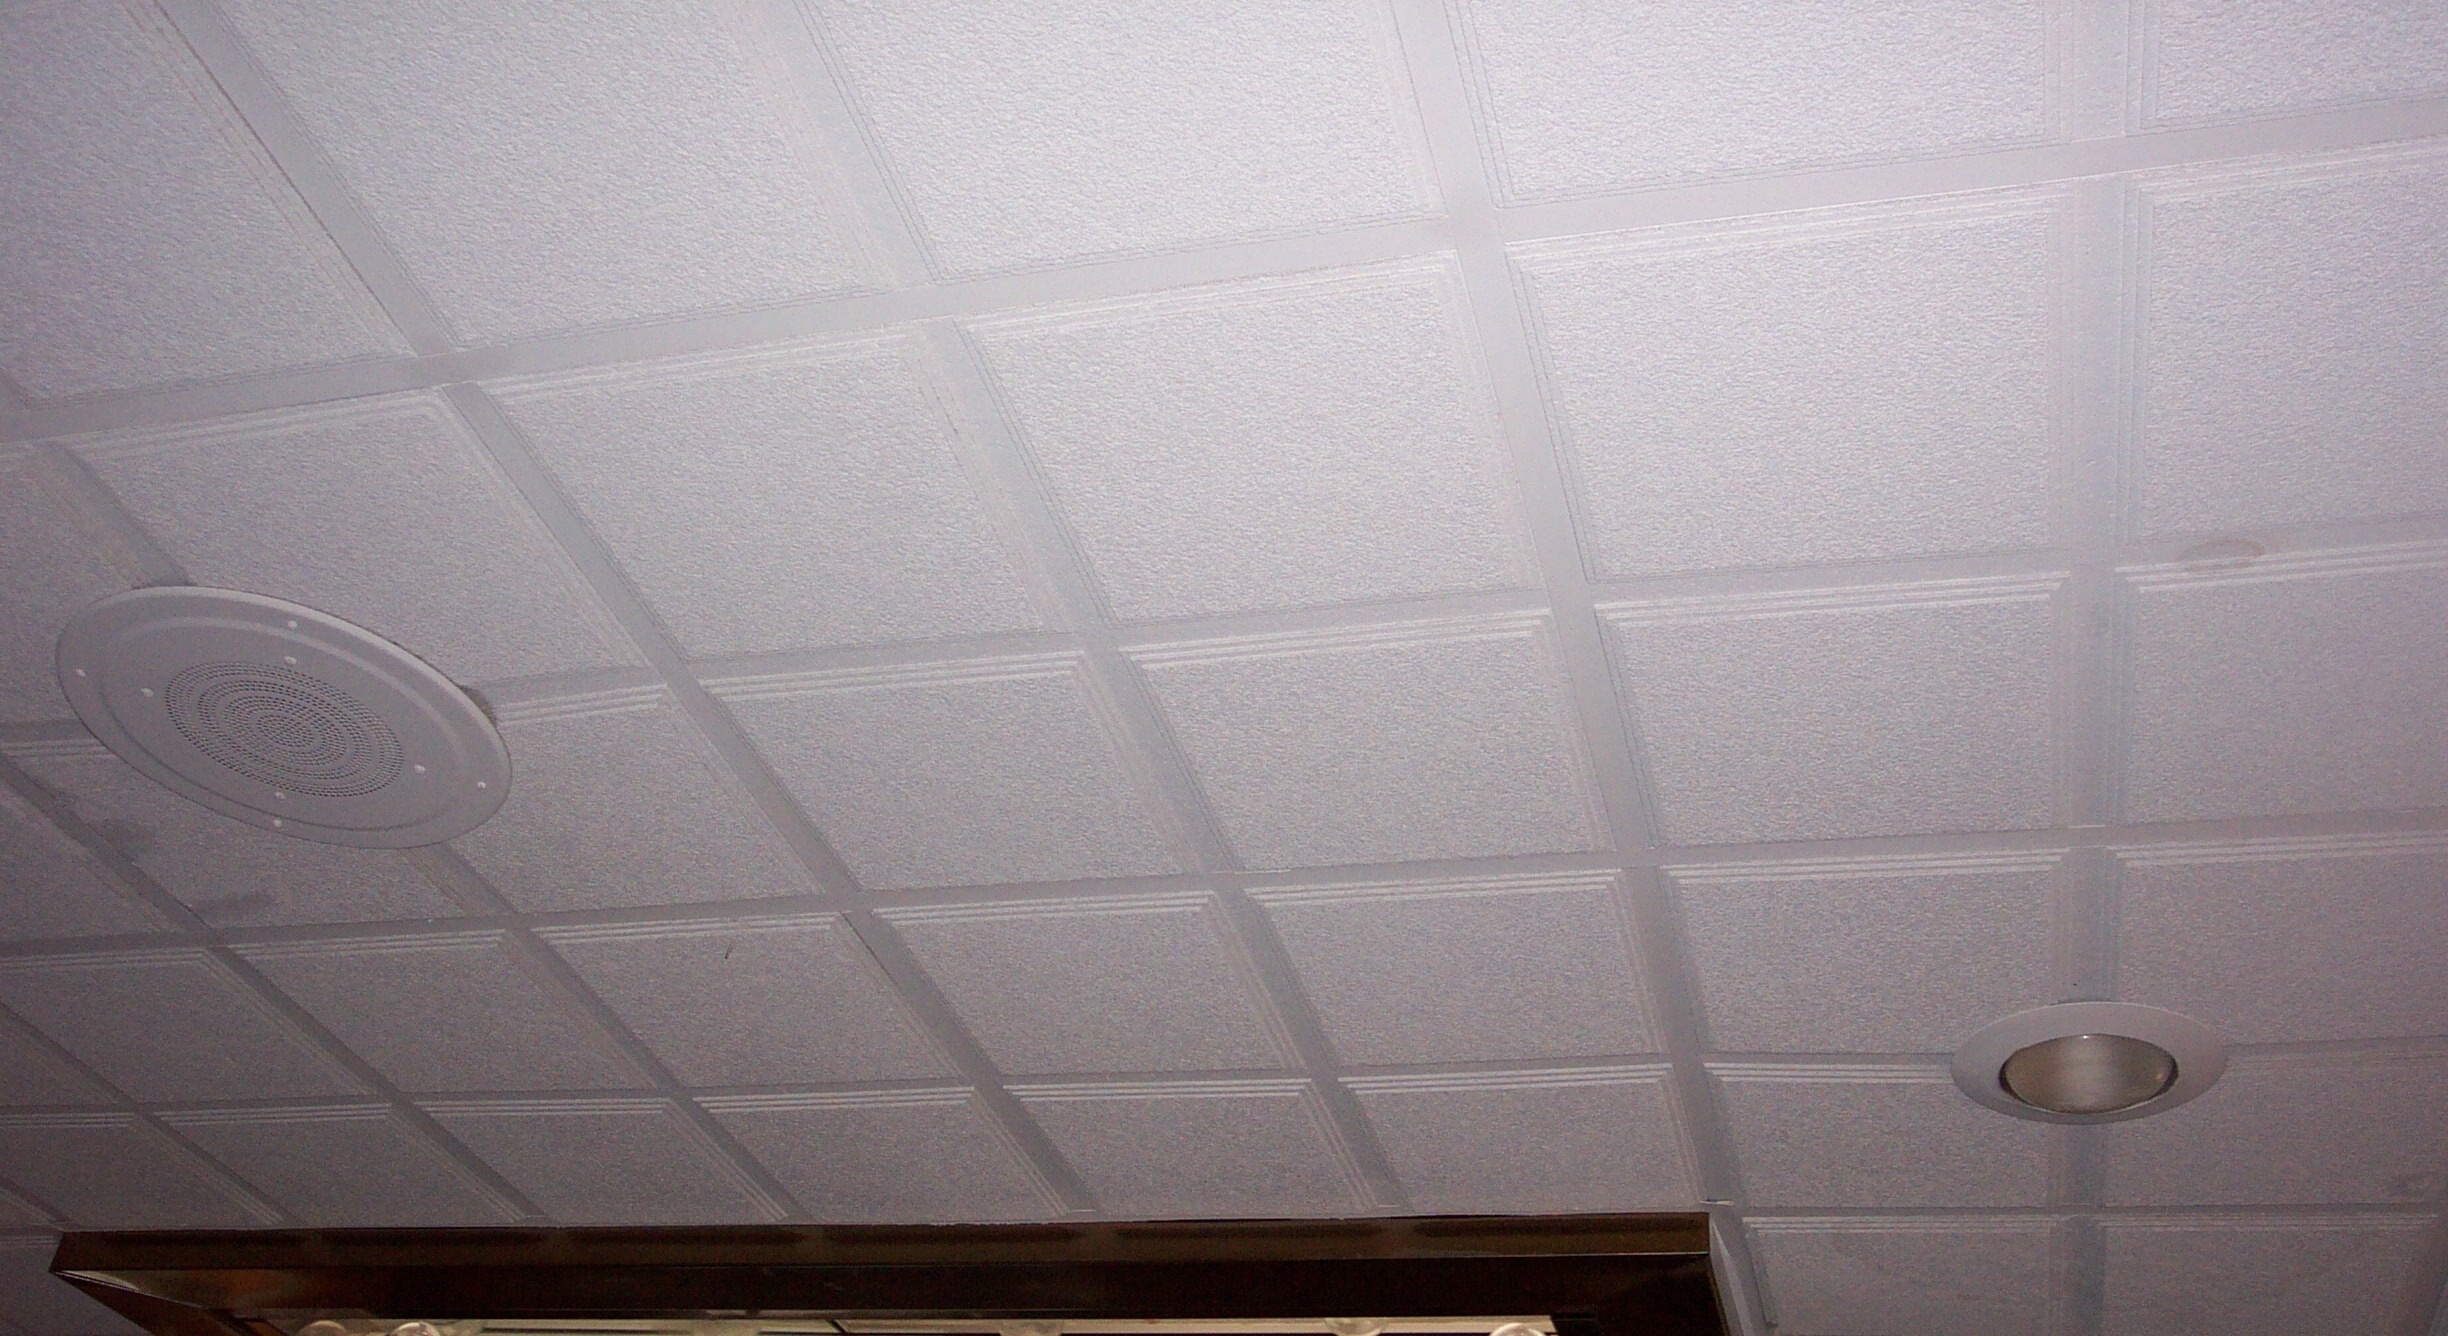 Ceiling Tile Grid Covers Ceiling Tile Grid Covers ceiling grid cover long roll deco tape faux tin self adhesive 2448 X 1336